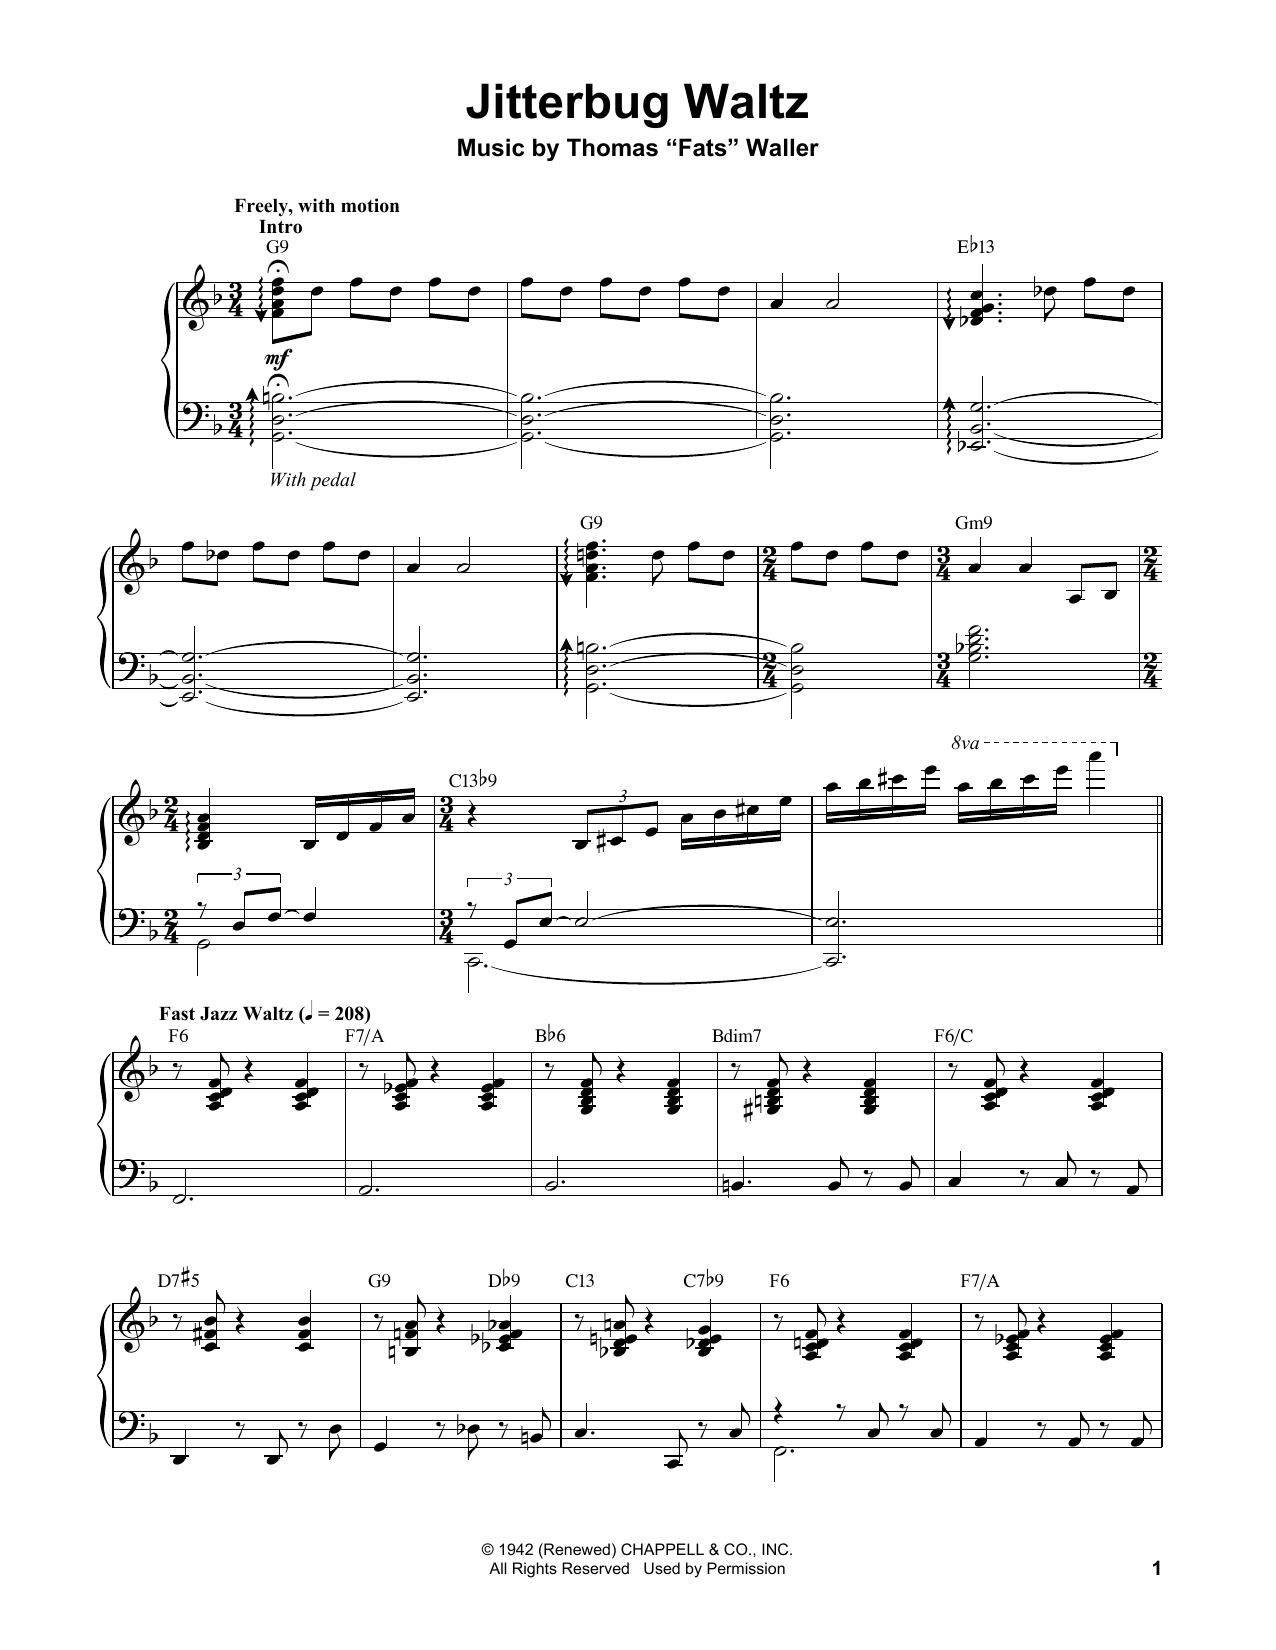 Vince Guaraldi Jitterbug Waltz Sheet Music Notes & Chords for Piano Transcription - Download or Print PDF